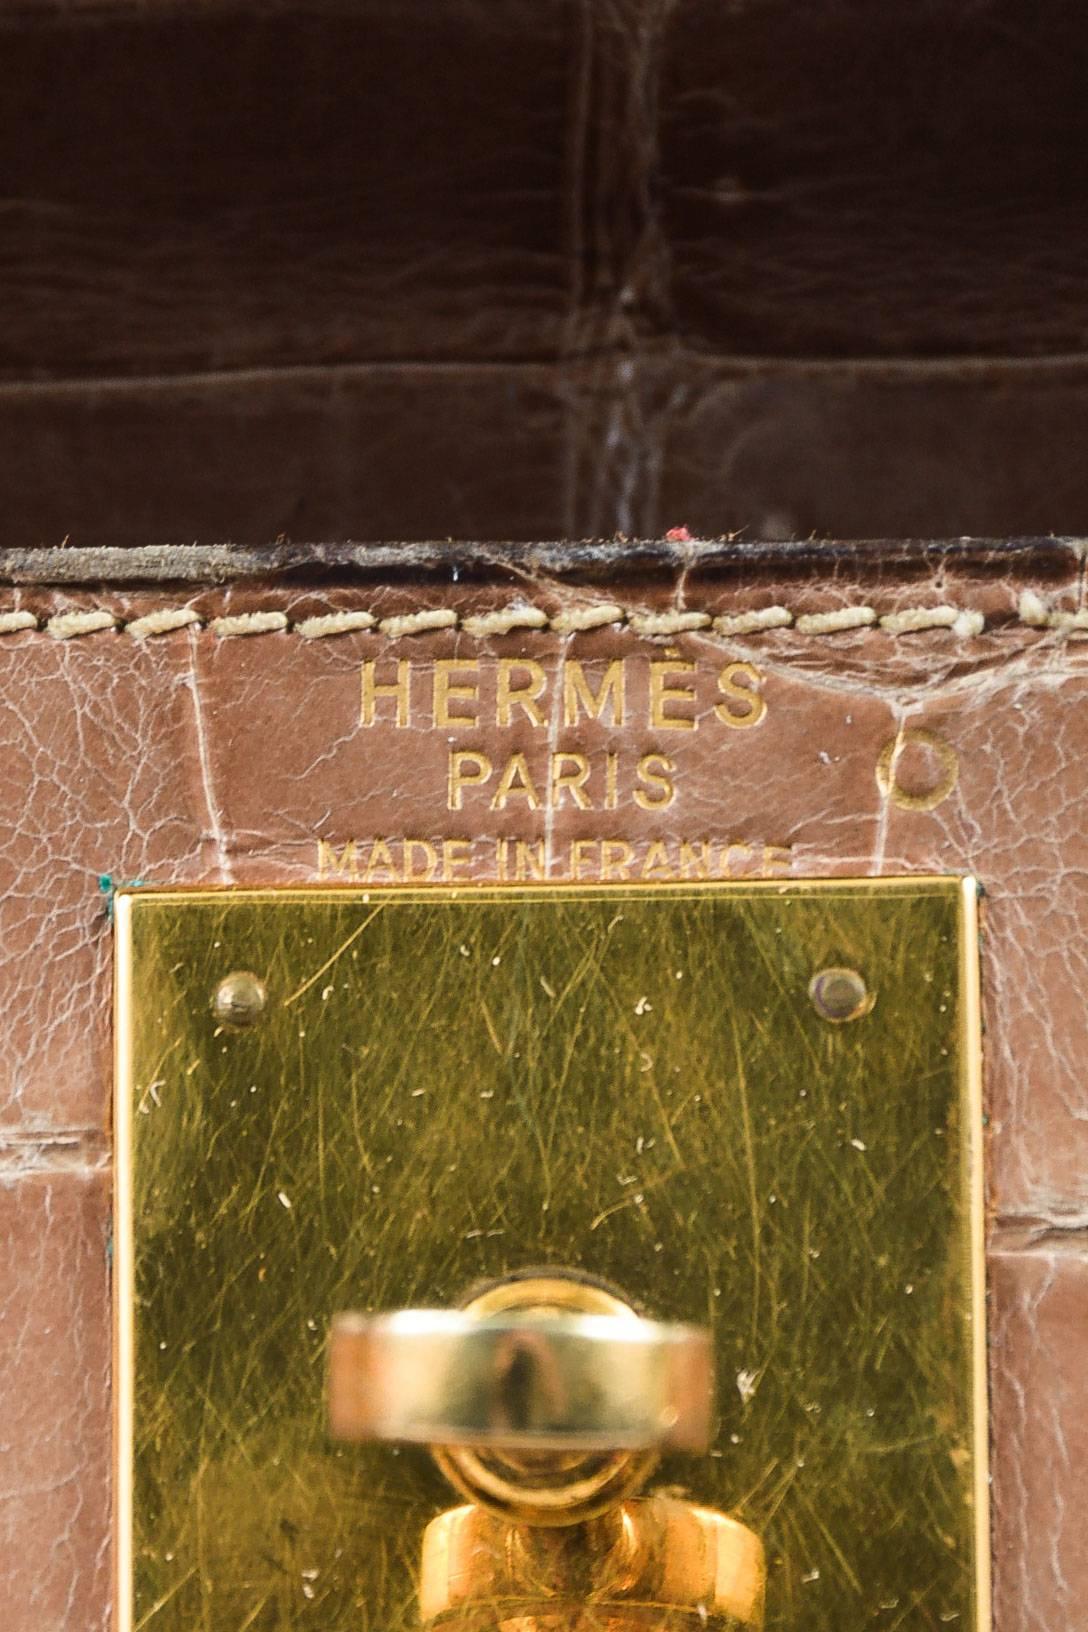 Vintage Hermes Taupe Crocodile Leather Gold Hardware 